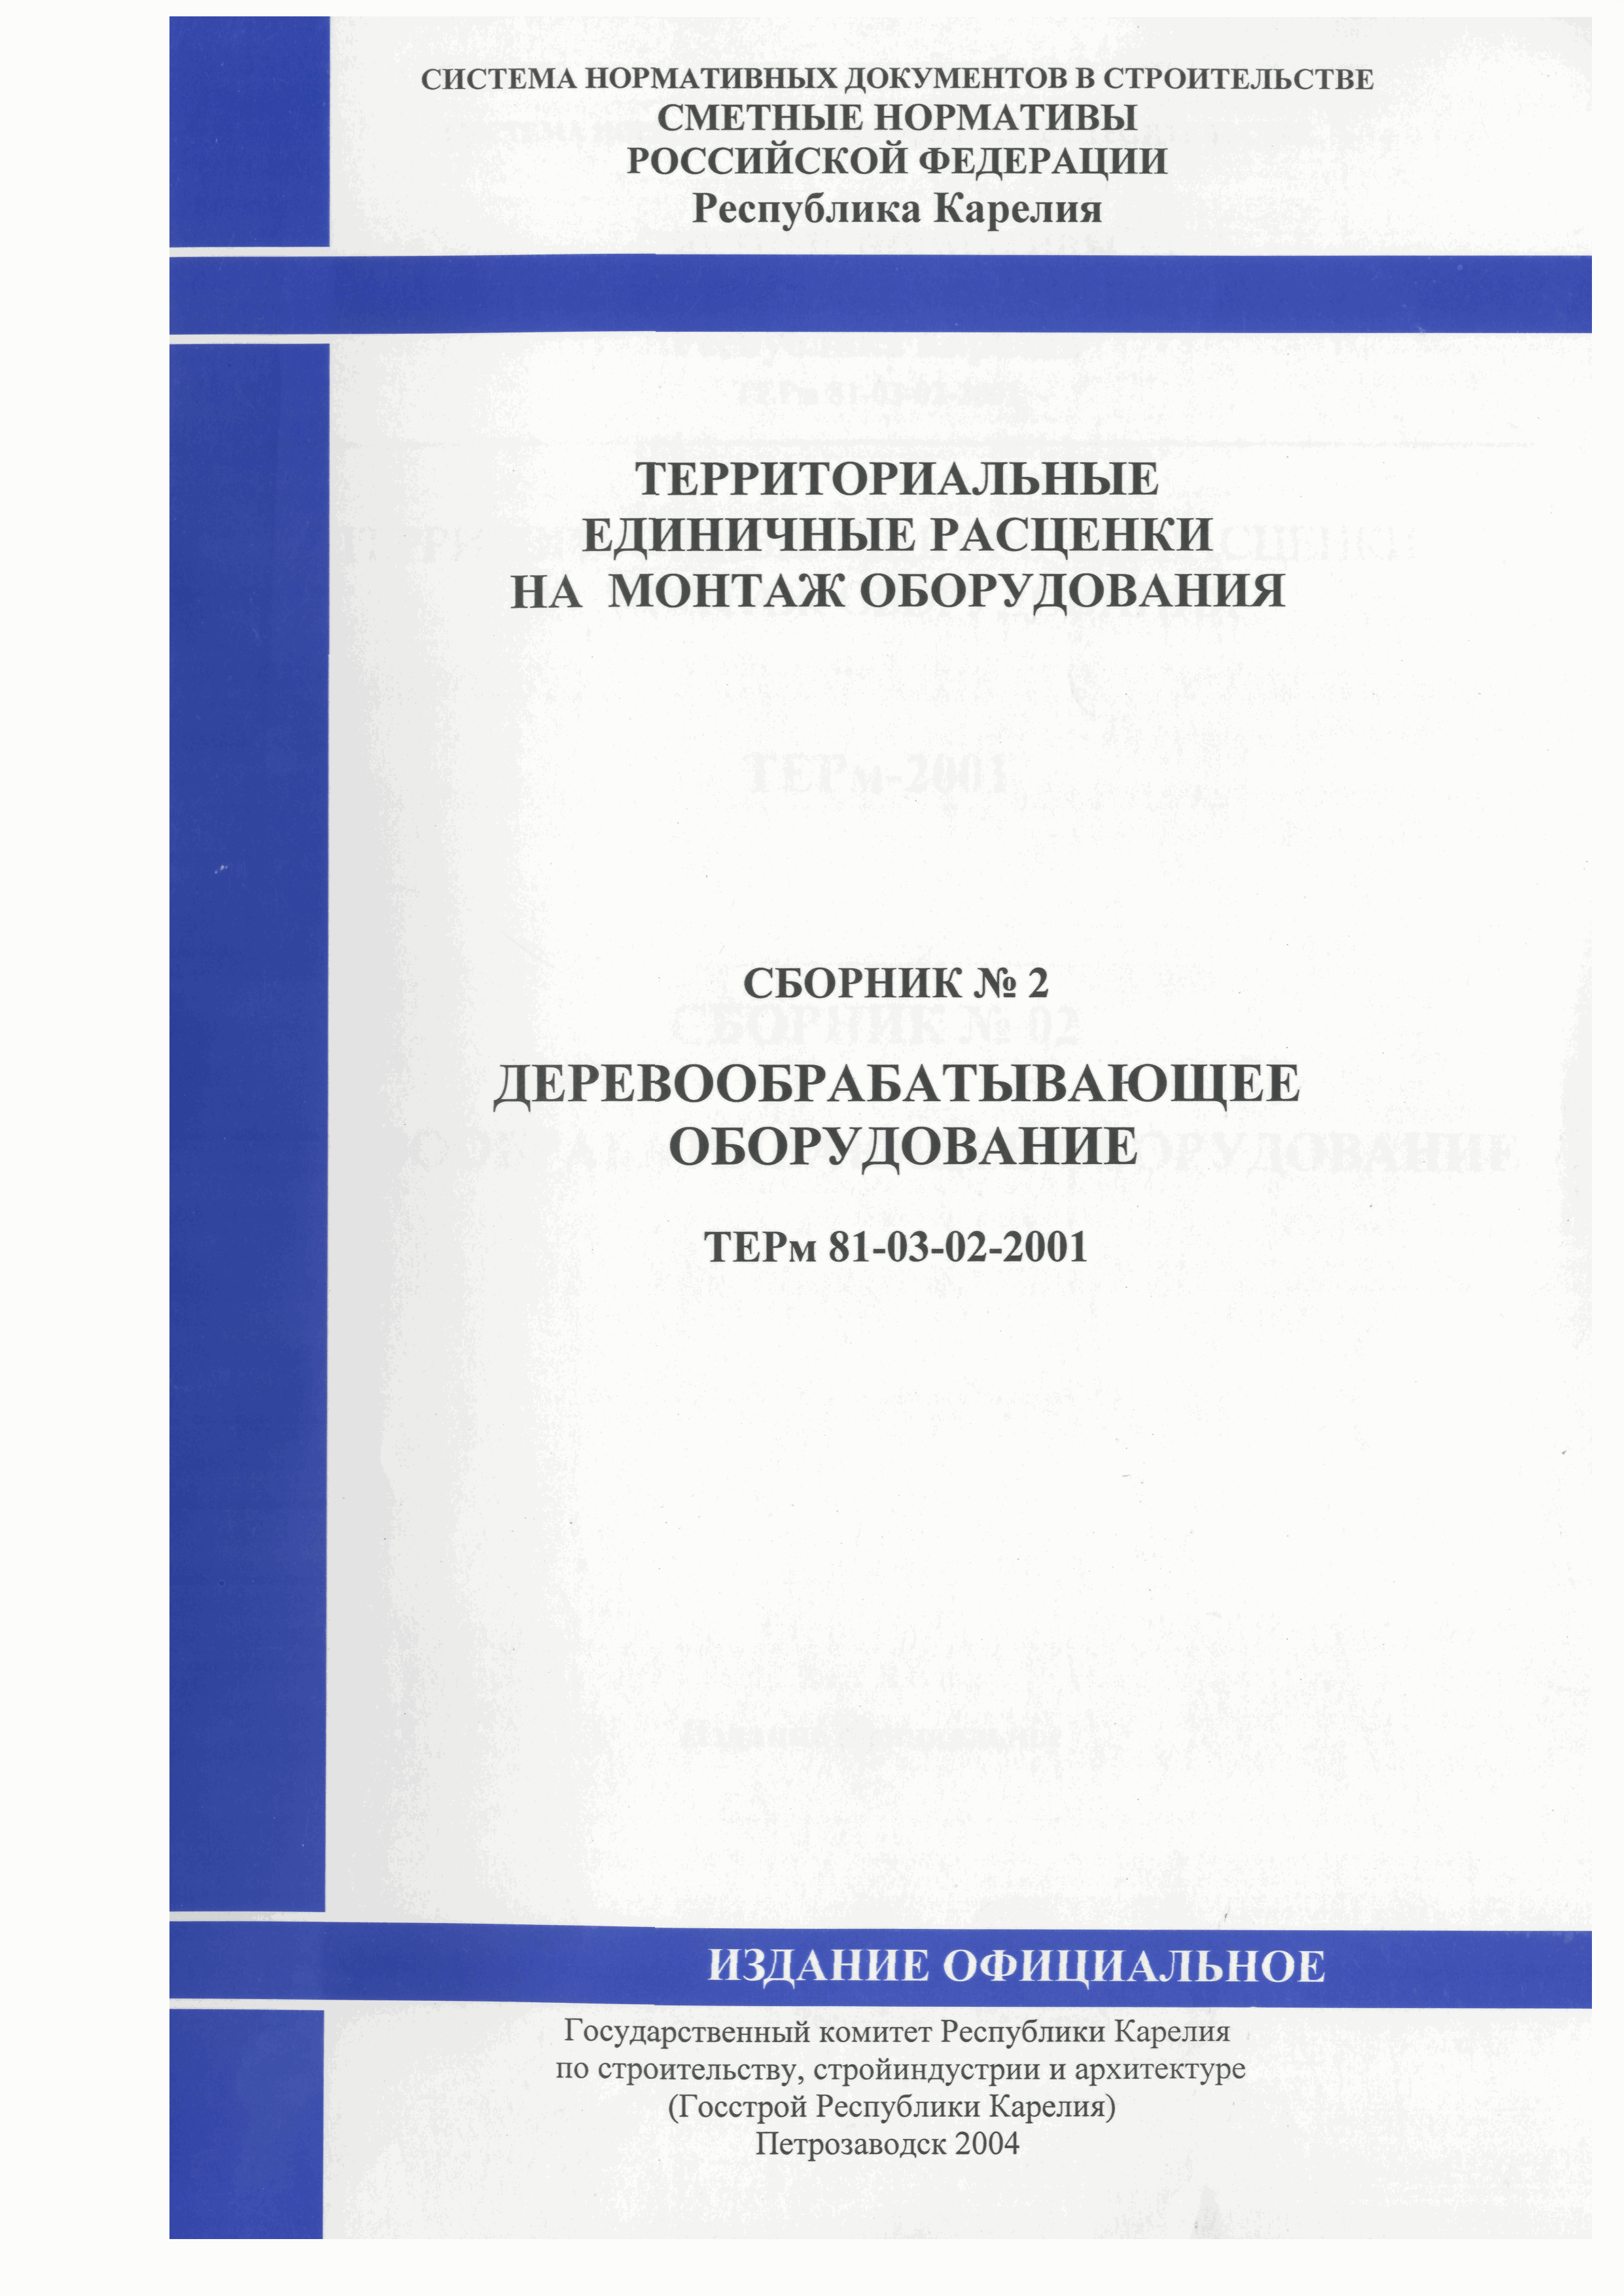 ТЕРм Республика Карелия 2001-02